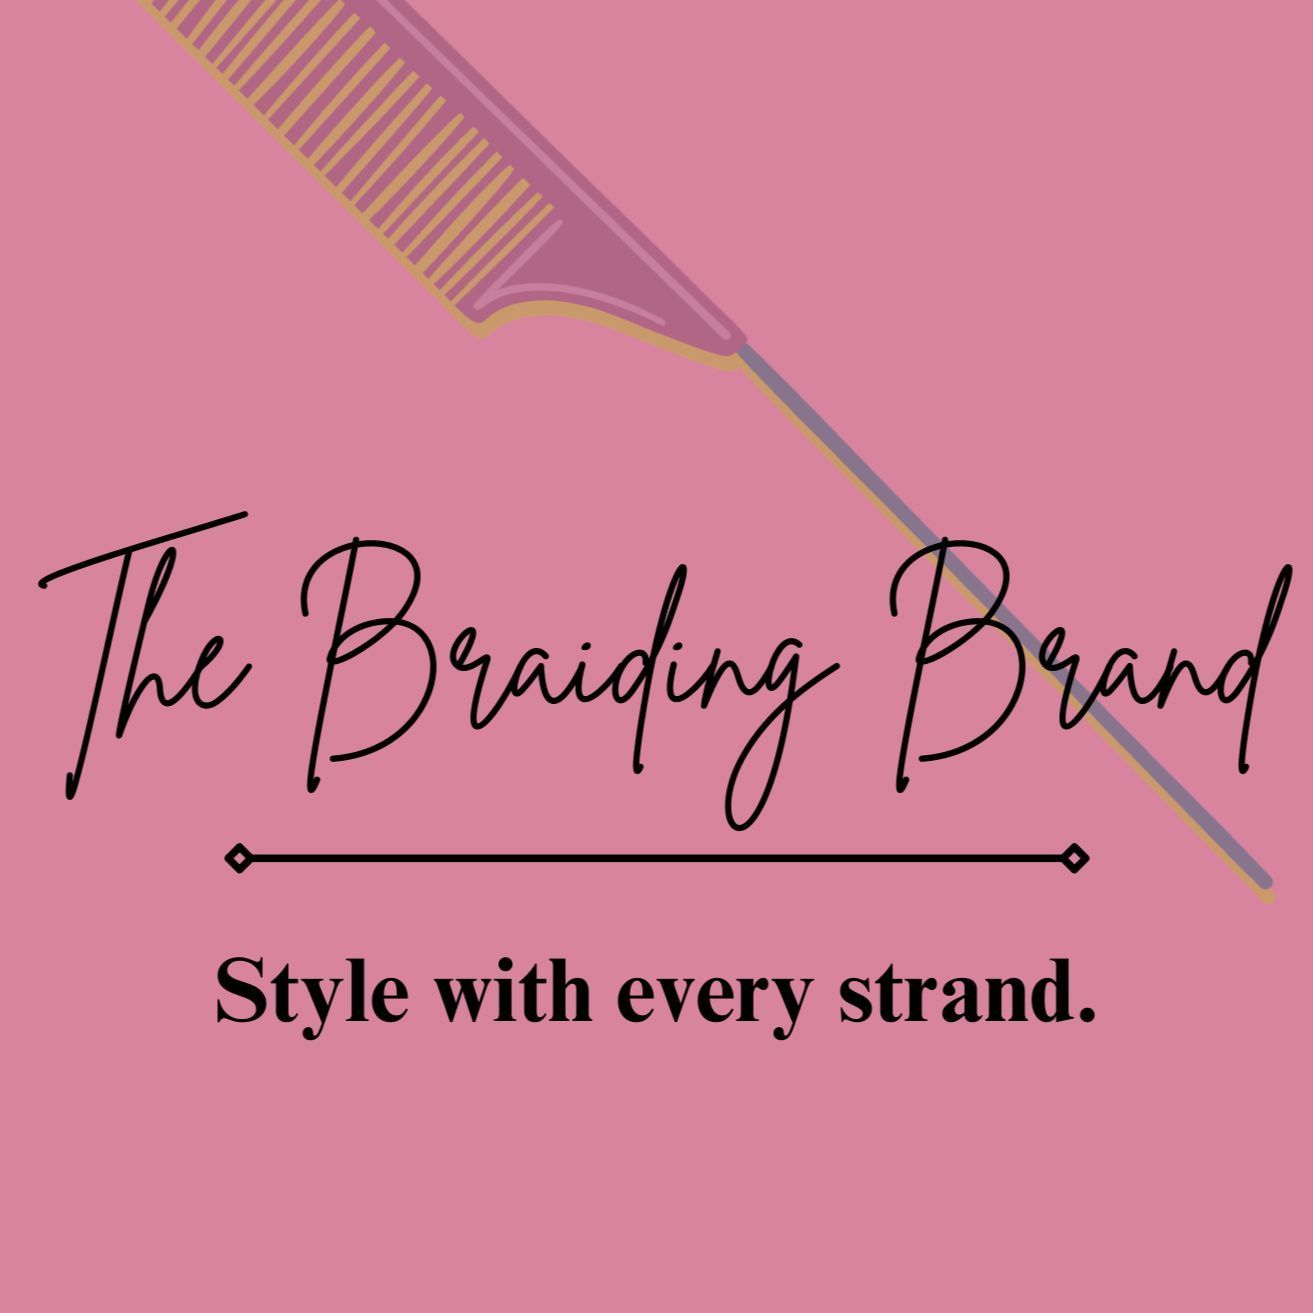 The Braiding Brand, 853 E Wildmere Ave, Longwood, 32750